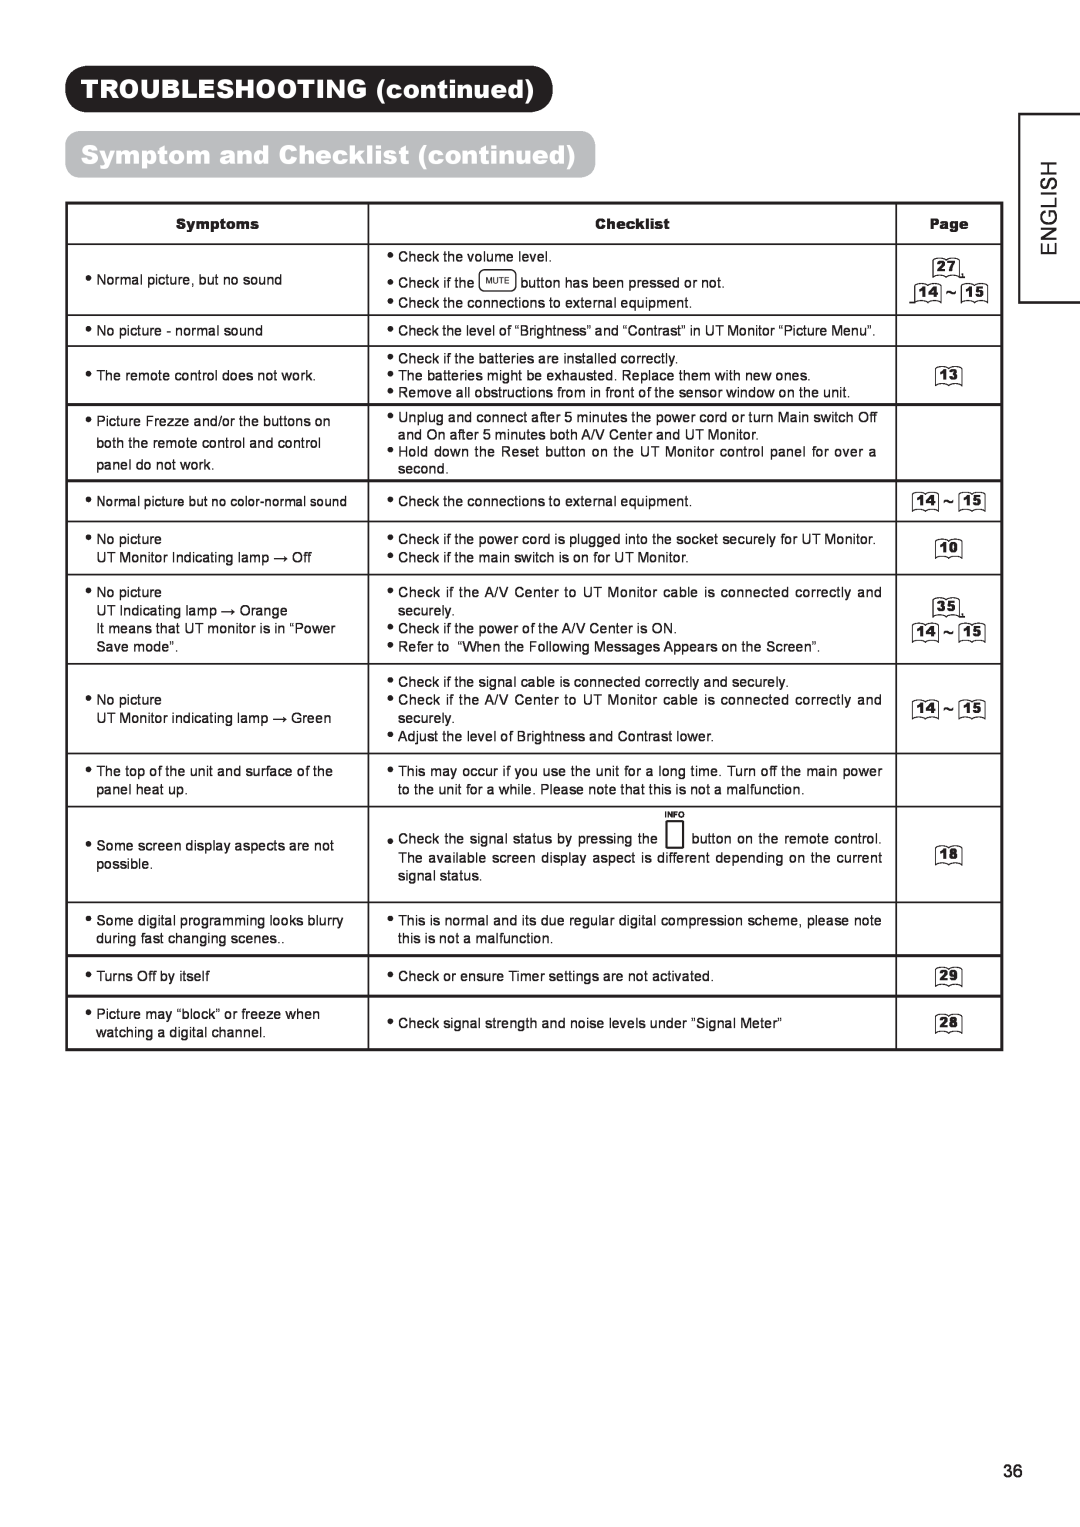 Hitachi AVC01U manual TROUBLESHOOTING continued, Symptom and Checklist continued, English 